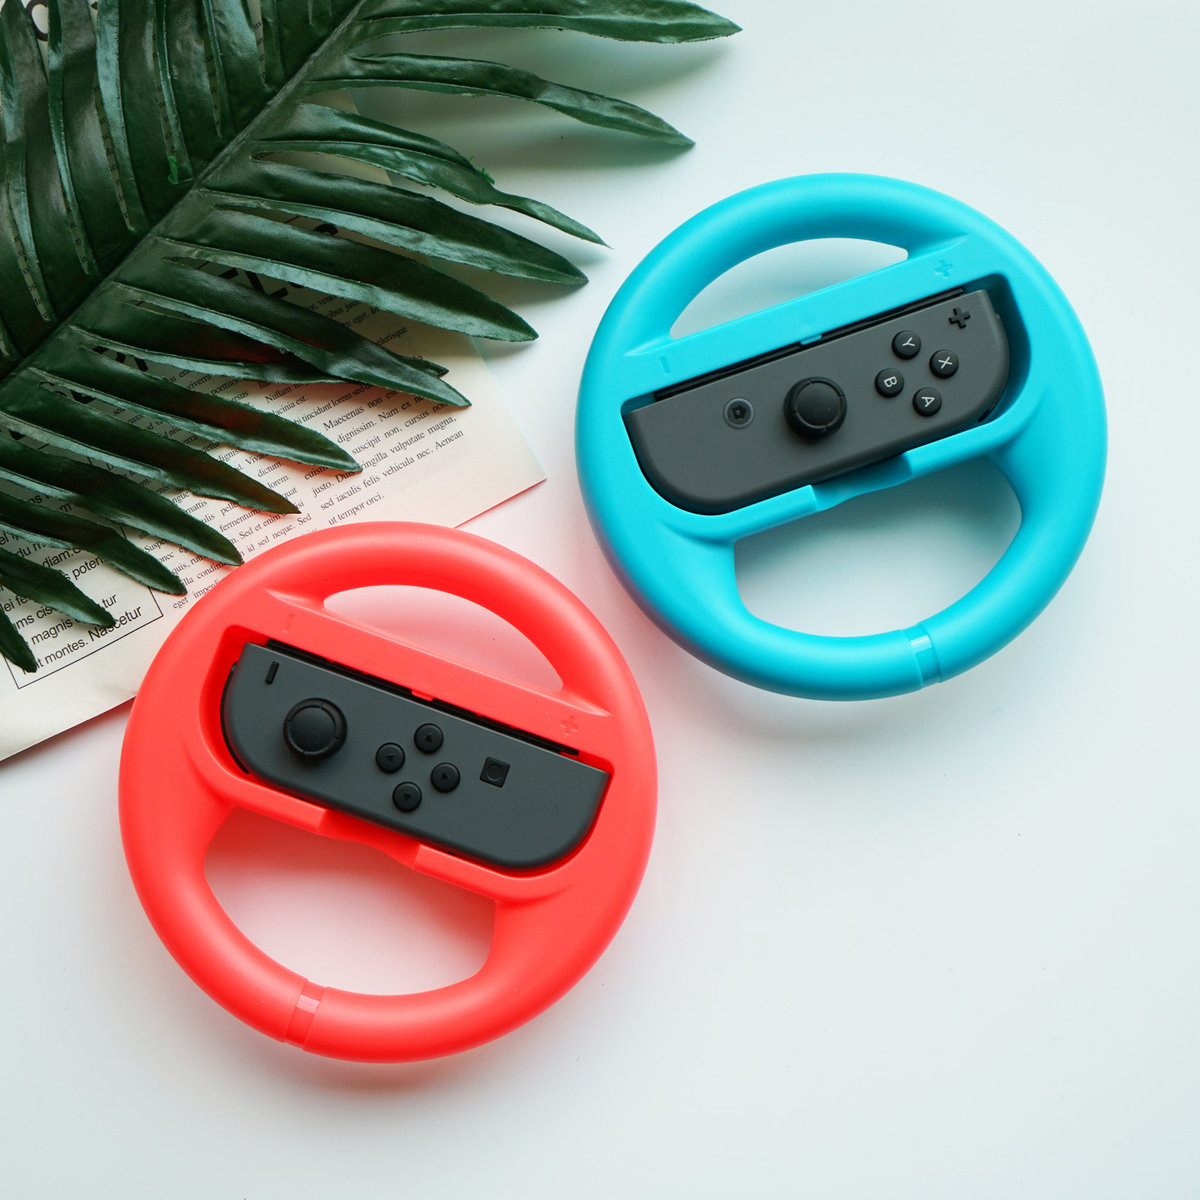 Mobilesteri 任天堂switch賽車遊戲代用控制器 Nintendo Switch 賽車遊戲控制軚盤 紅色 藍色2個裝 香港電視hktvmall 網上購物